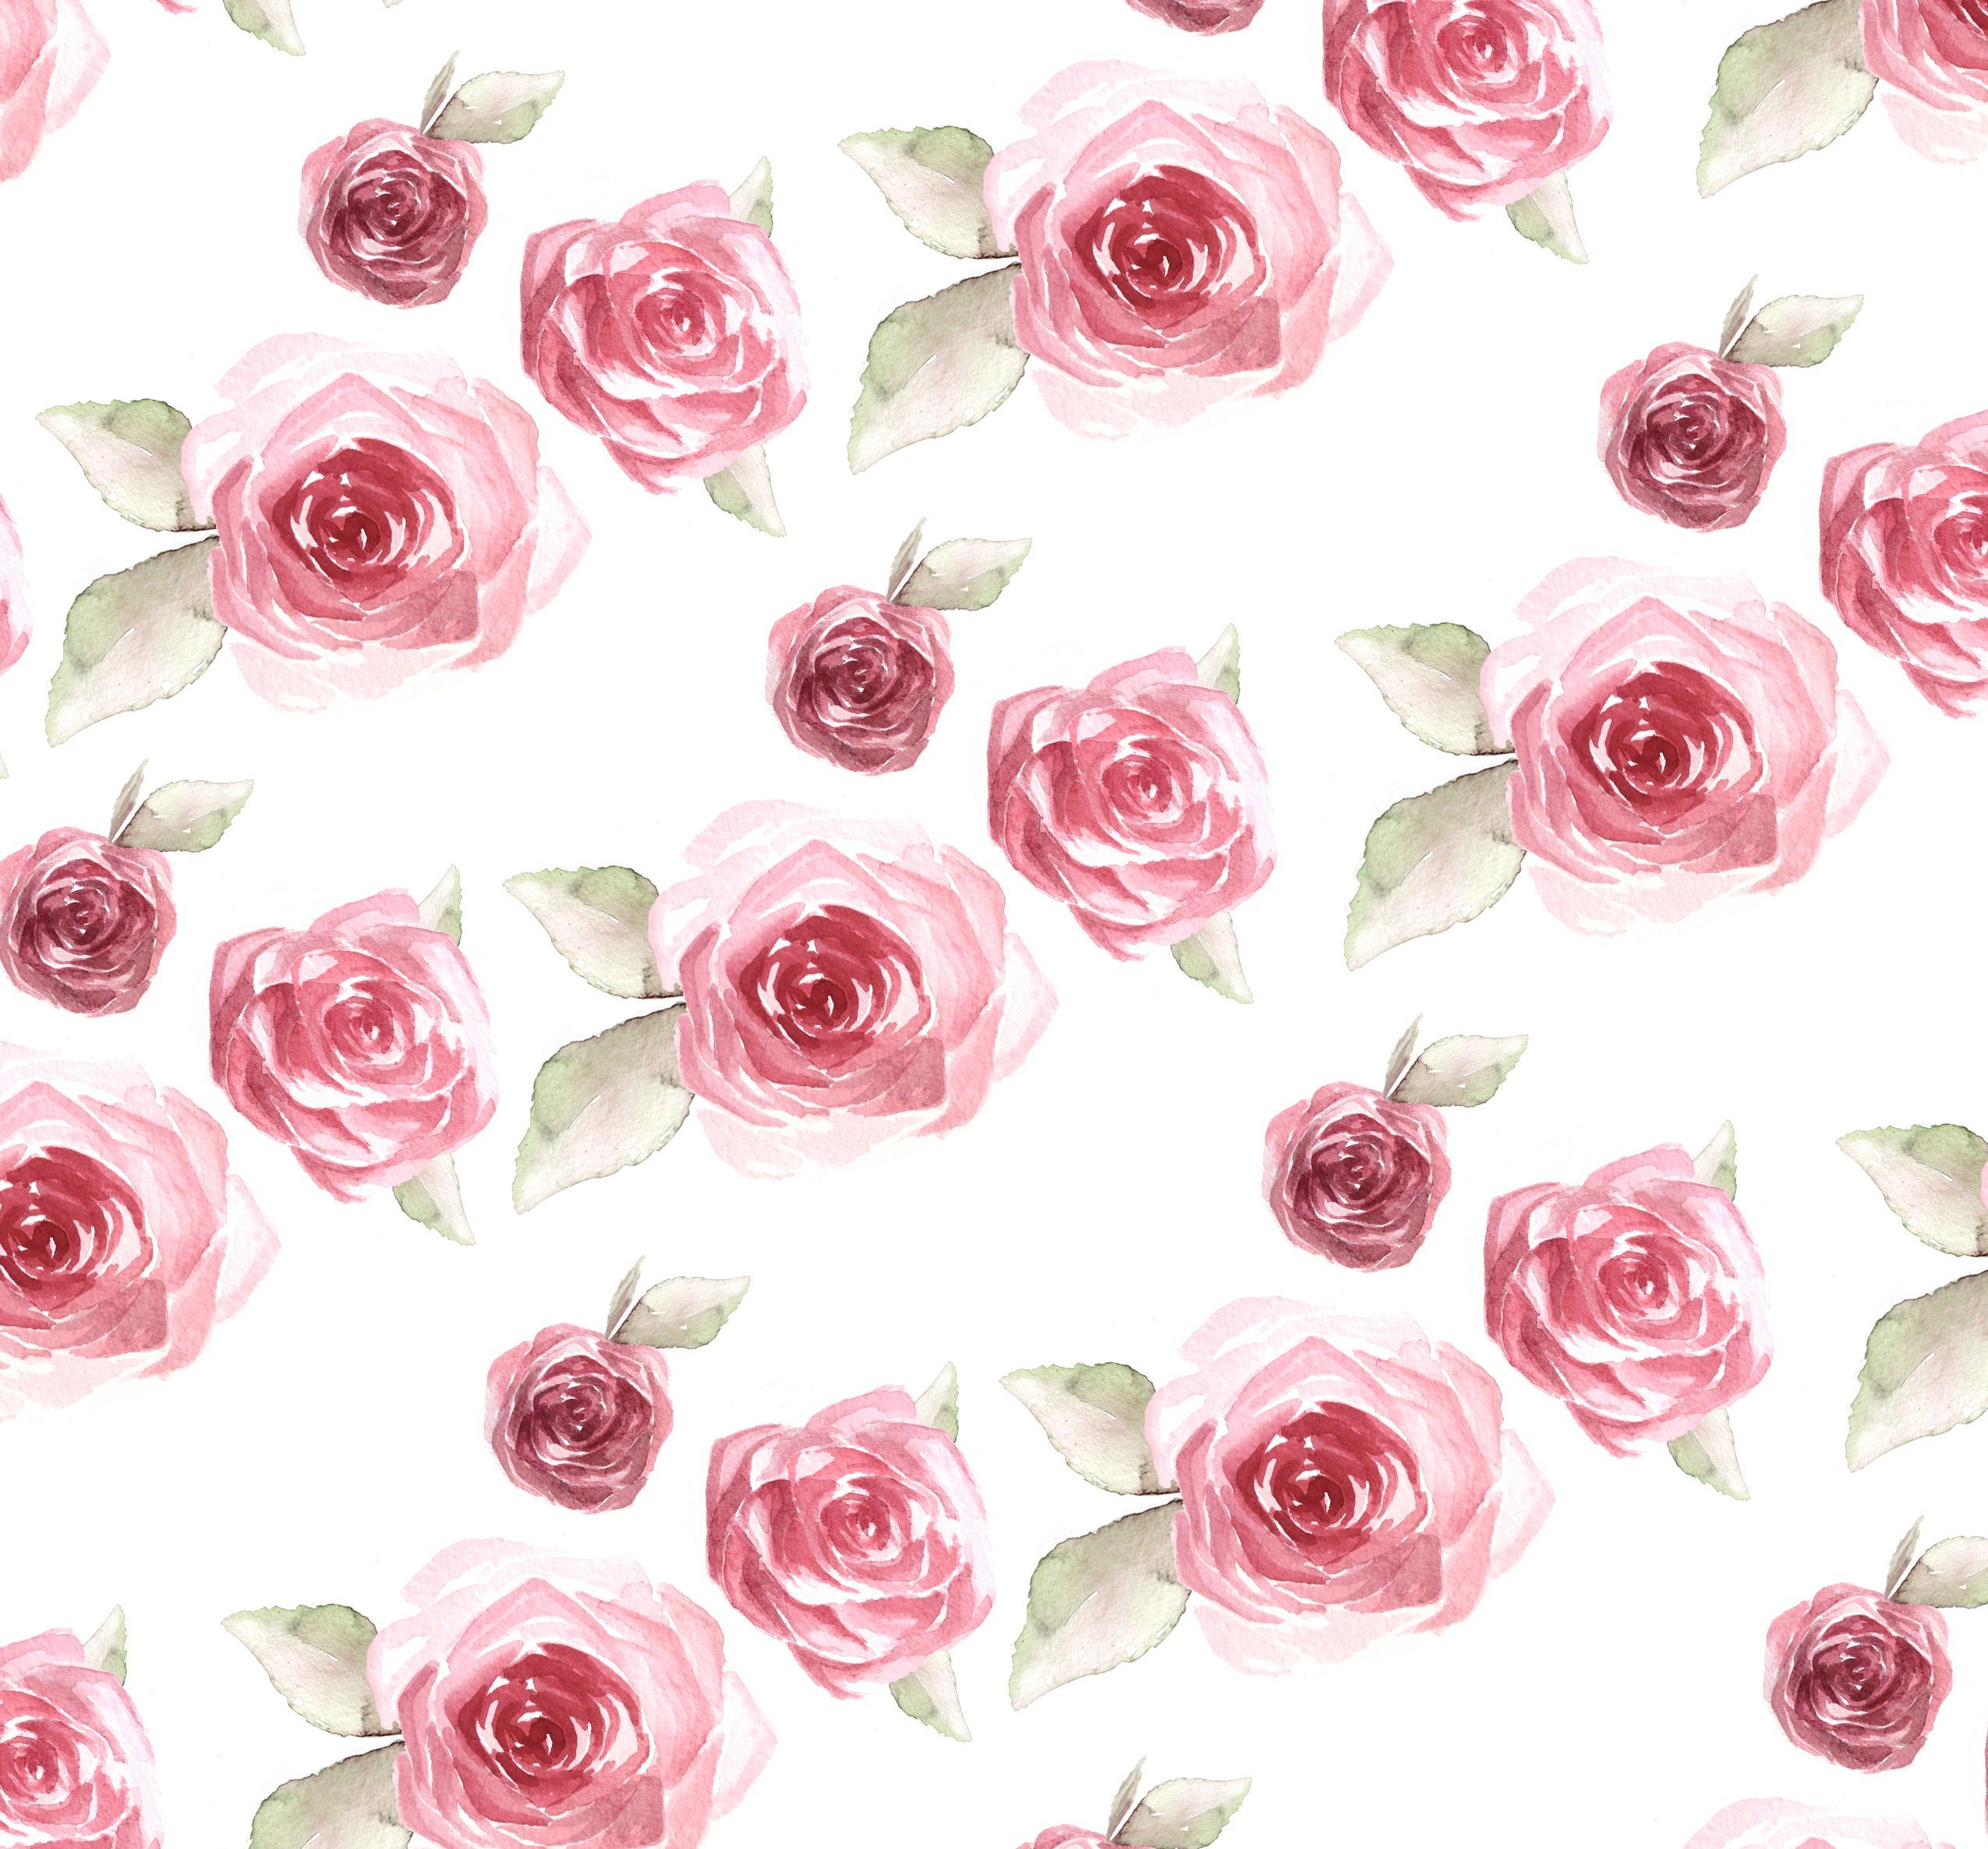 Rose Flower Artwork Wallpapers - Wallpaper Cave